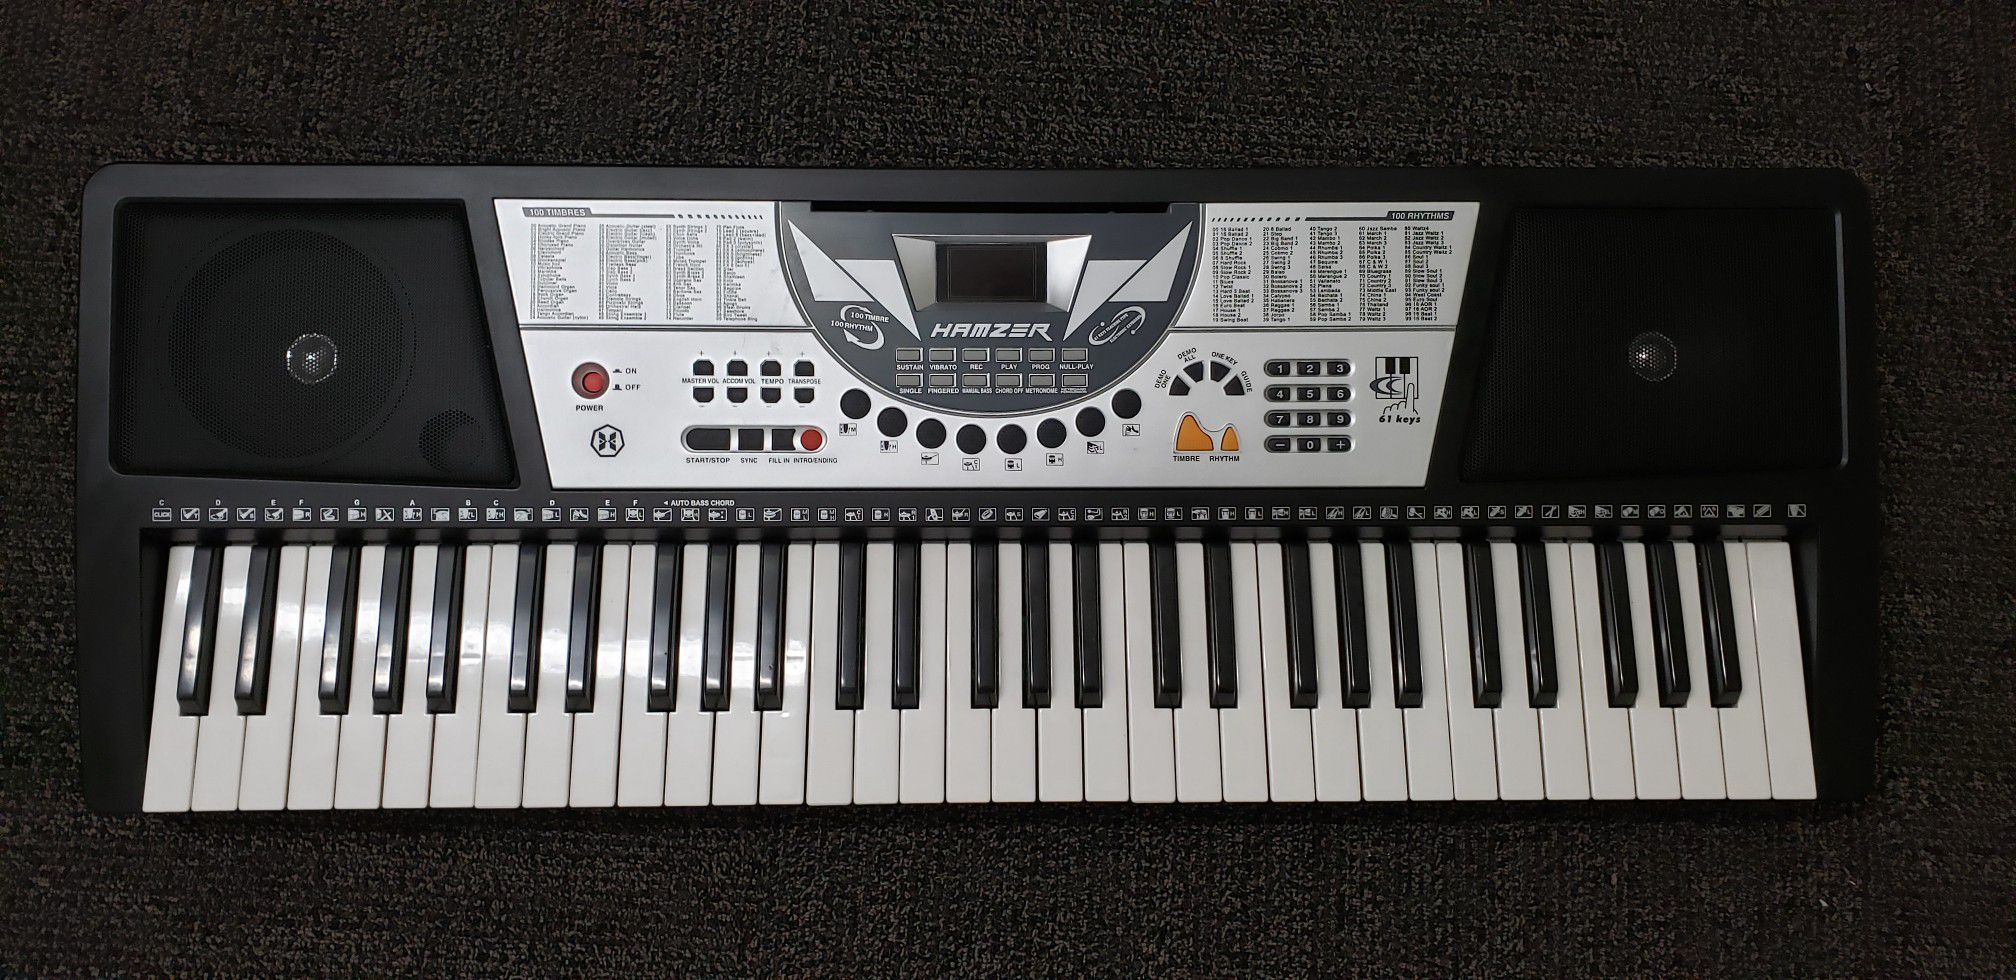 Hamzer 61-Key Digital Music Piano Keyboard - Portable Electronic Musical Instrument